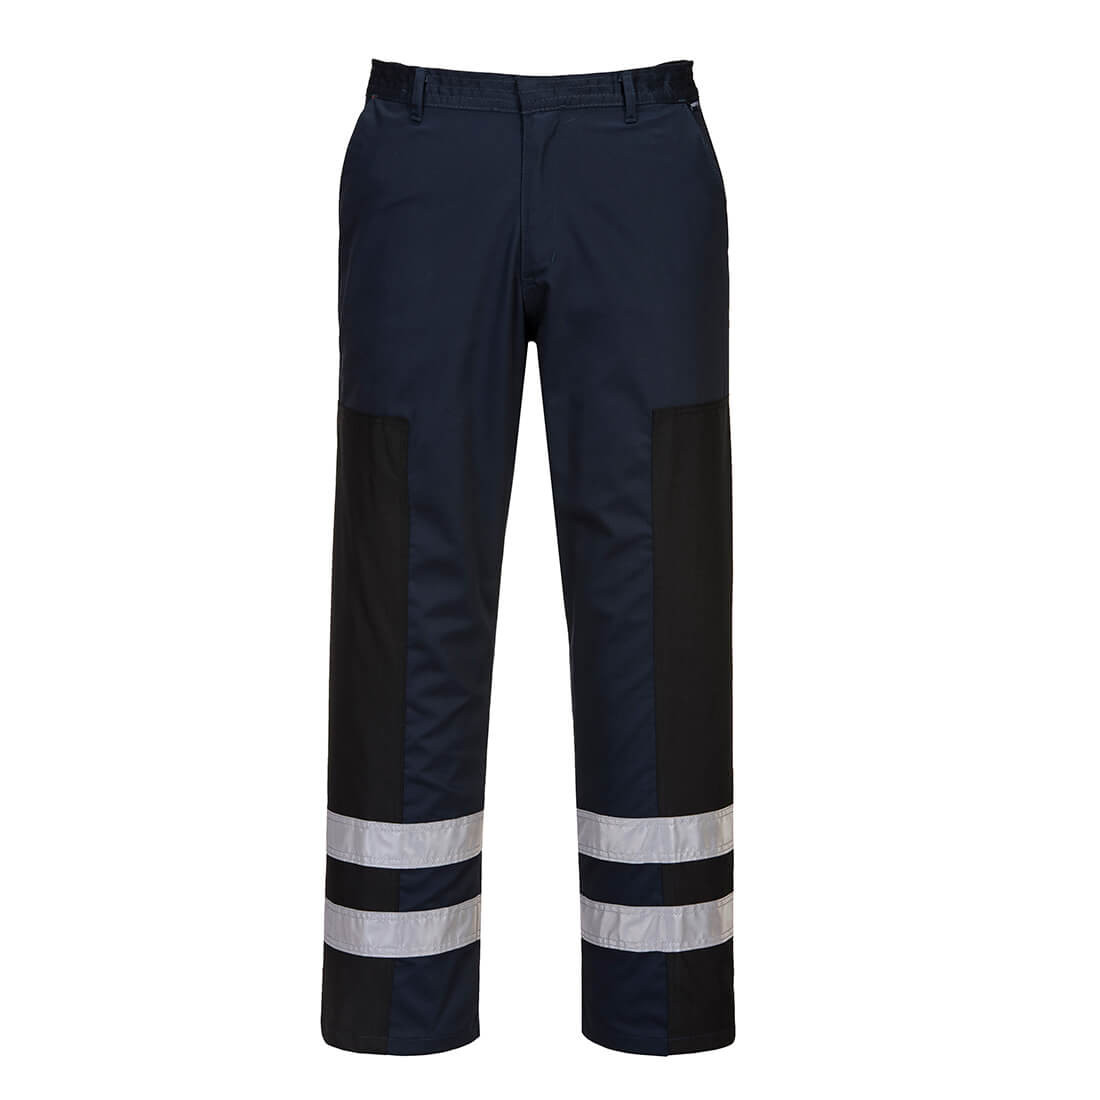 Pantalones Ballistic - Ropa de protección